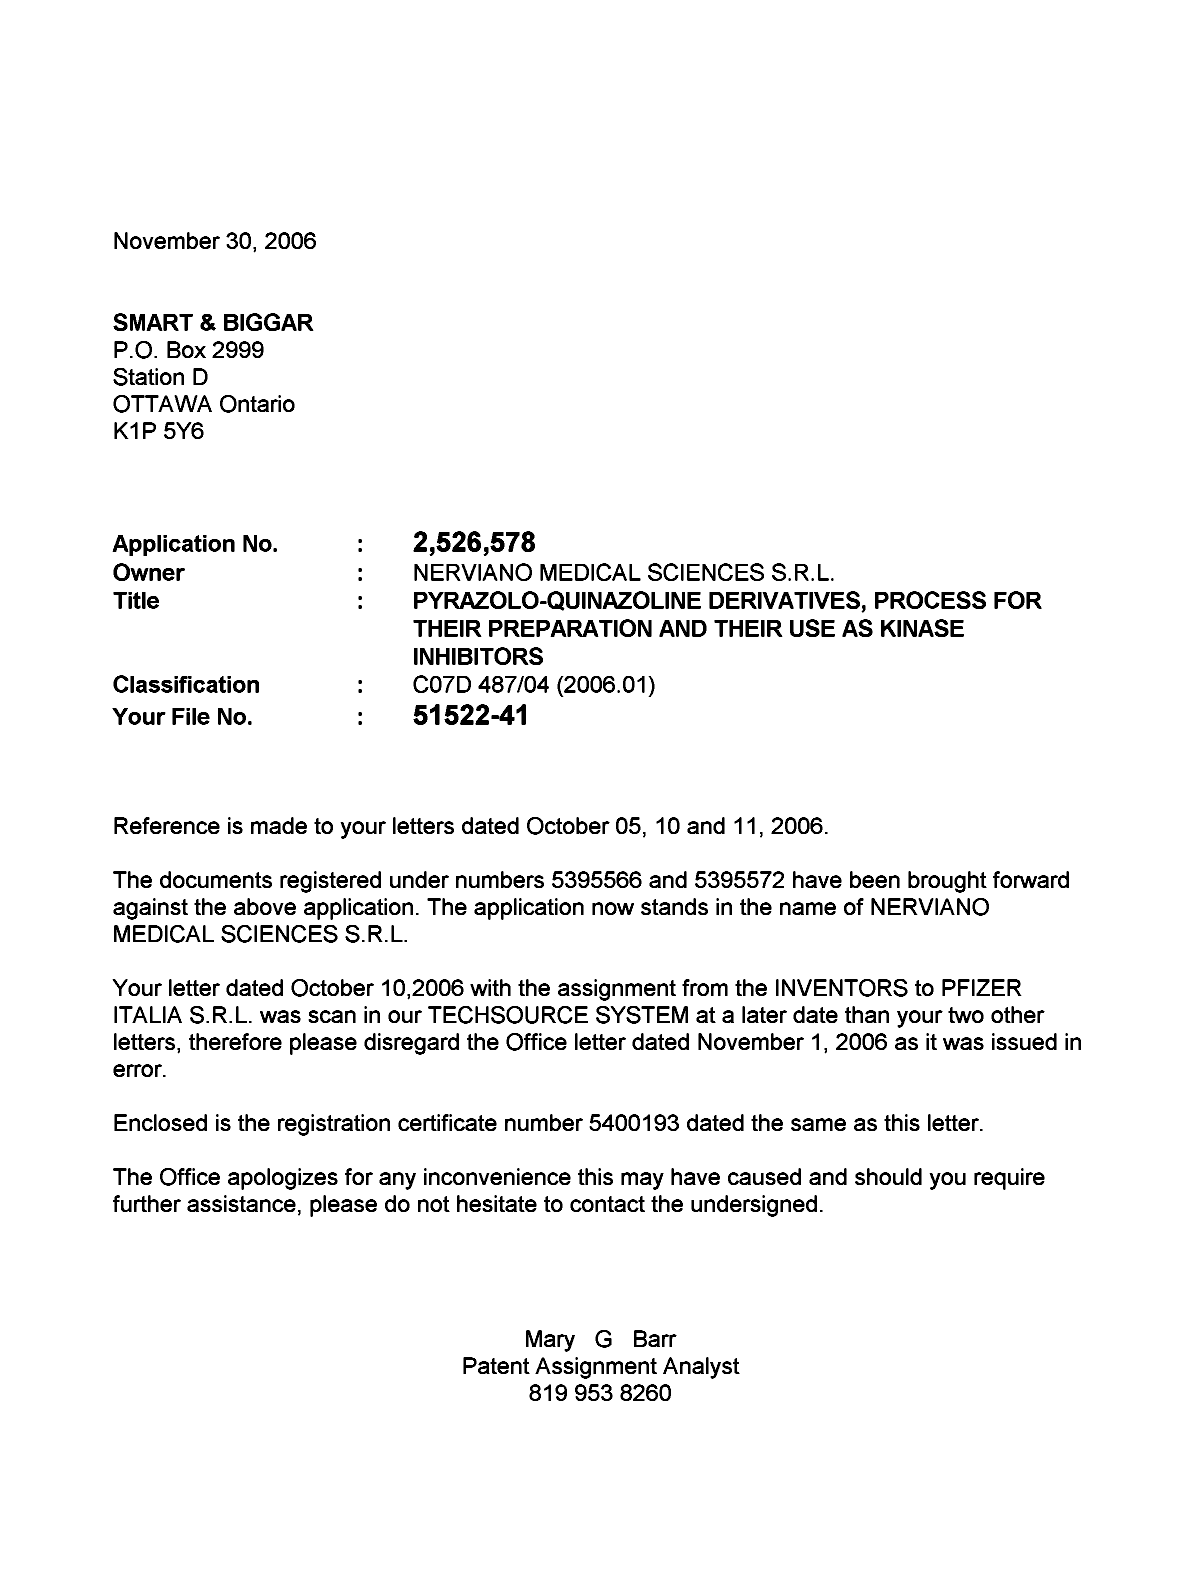 Canadian Patent Document 2526578. Correspondence 20061130. Image 1 of 1